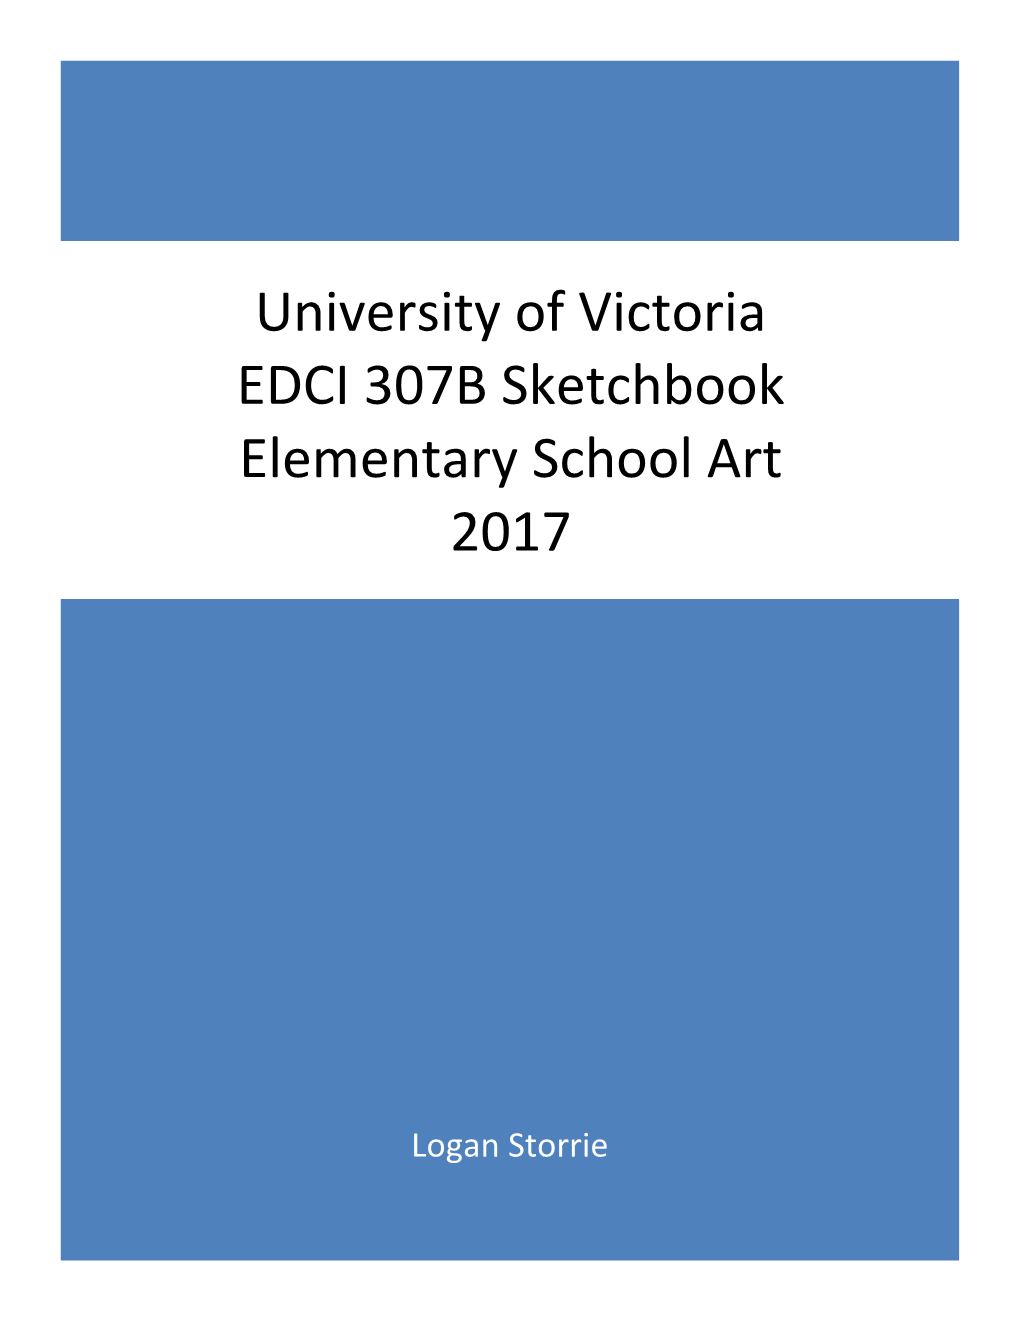 University of Victoria EDCI 307B Sketchbook Elementary School Art 2017